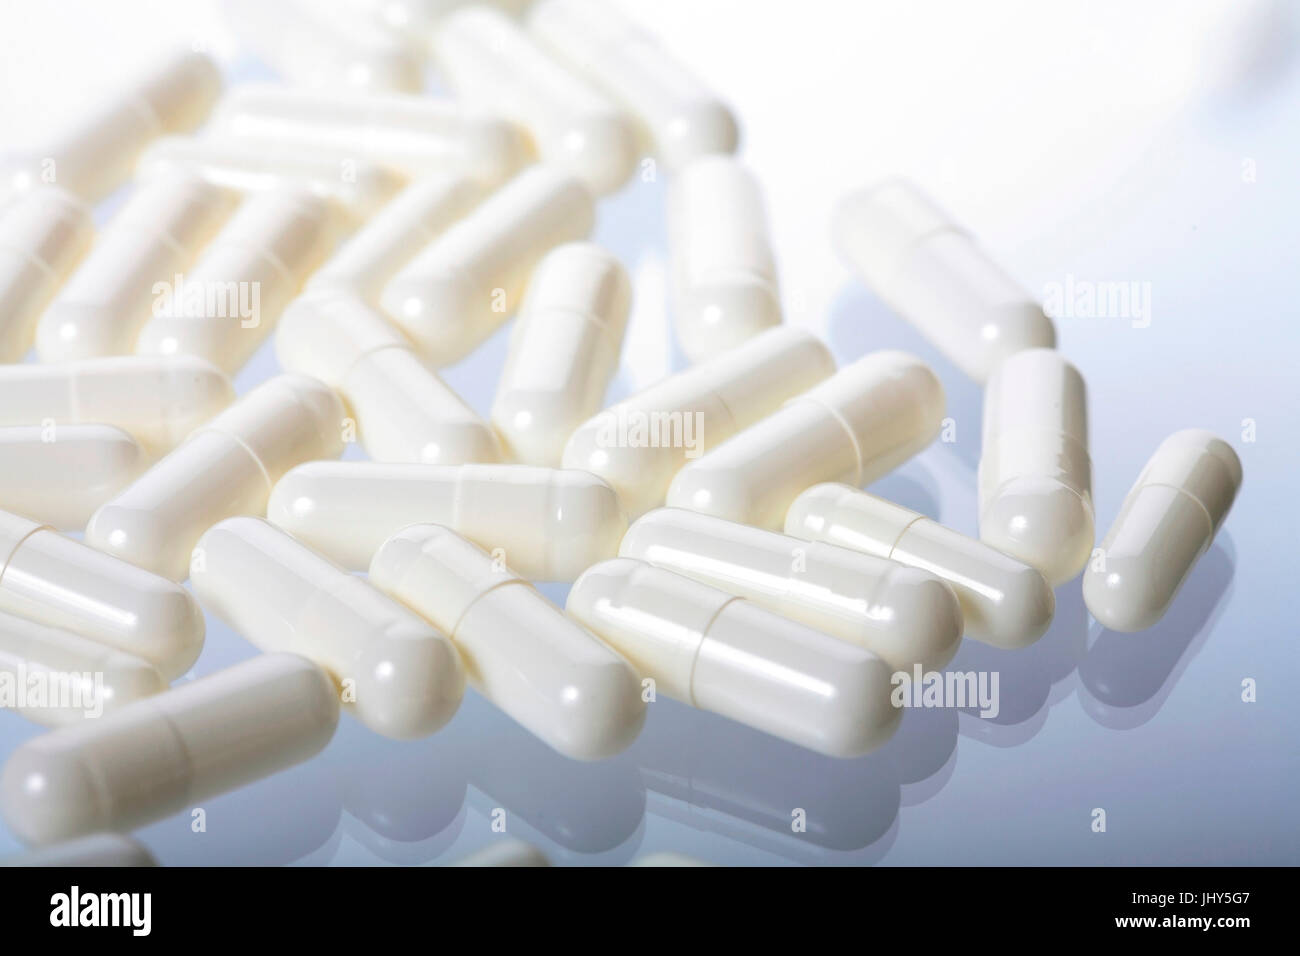 Compresse - medicina - farmaci, Tabletten - Medizin - Medikamente Foto Stock